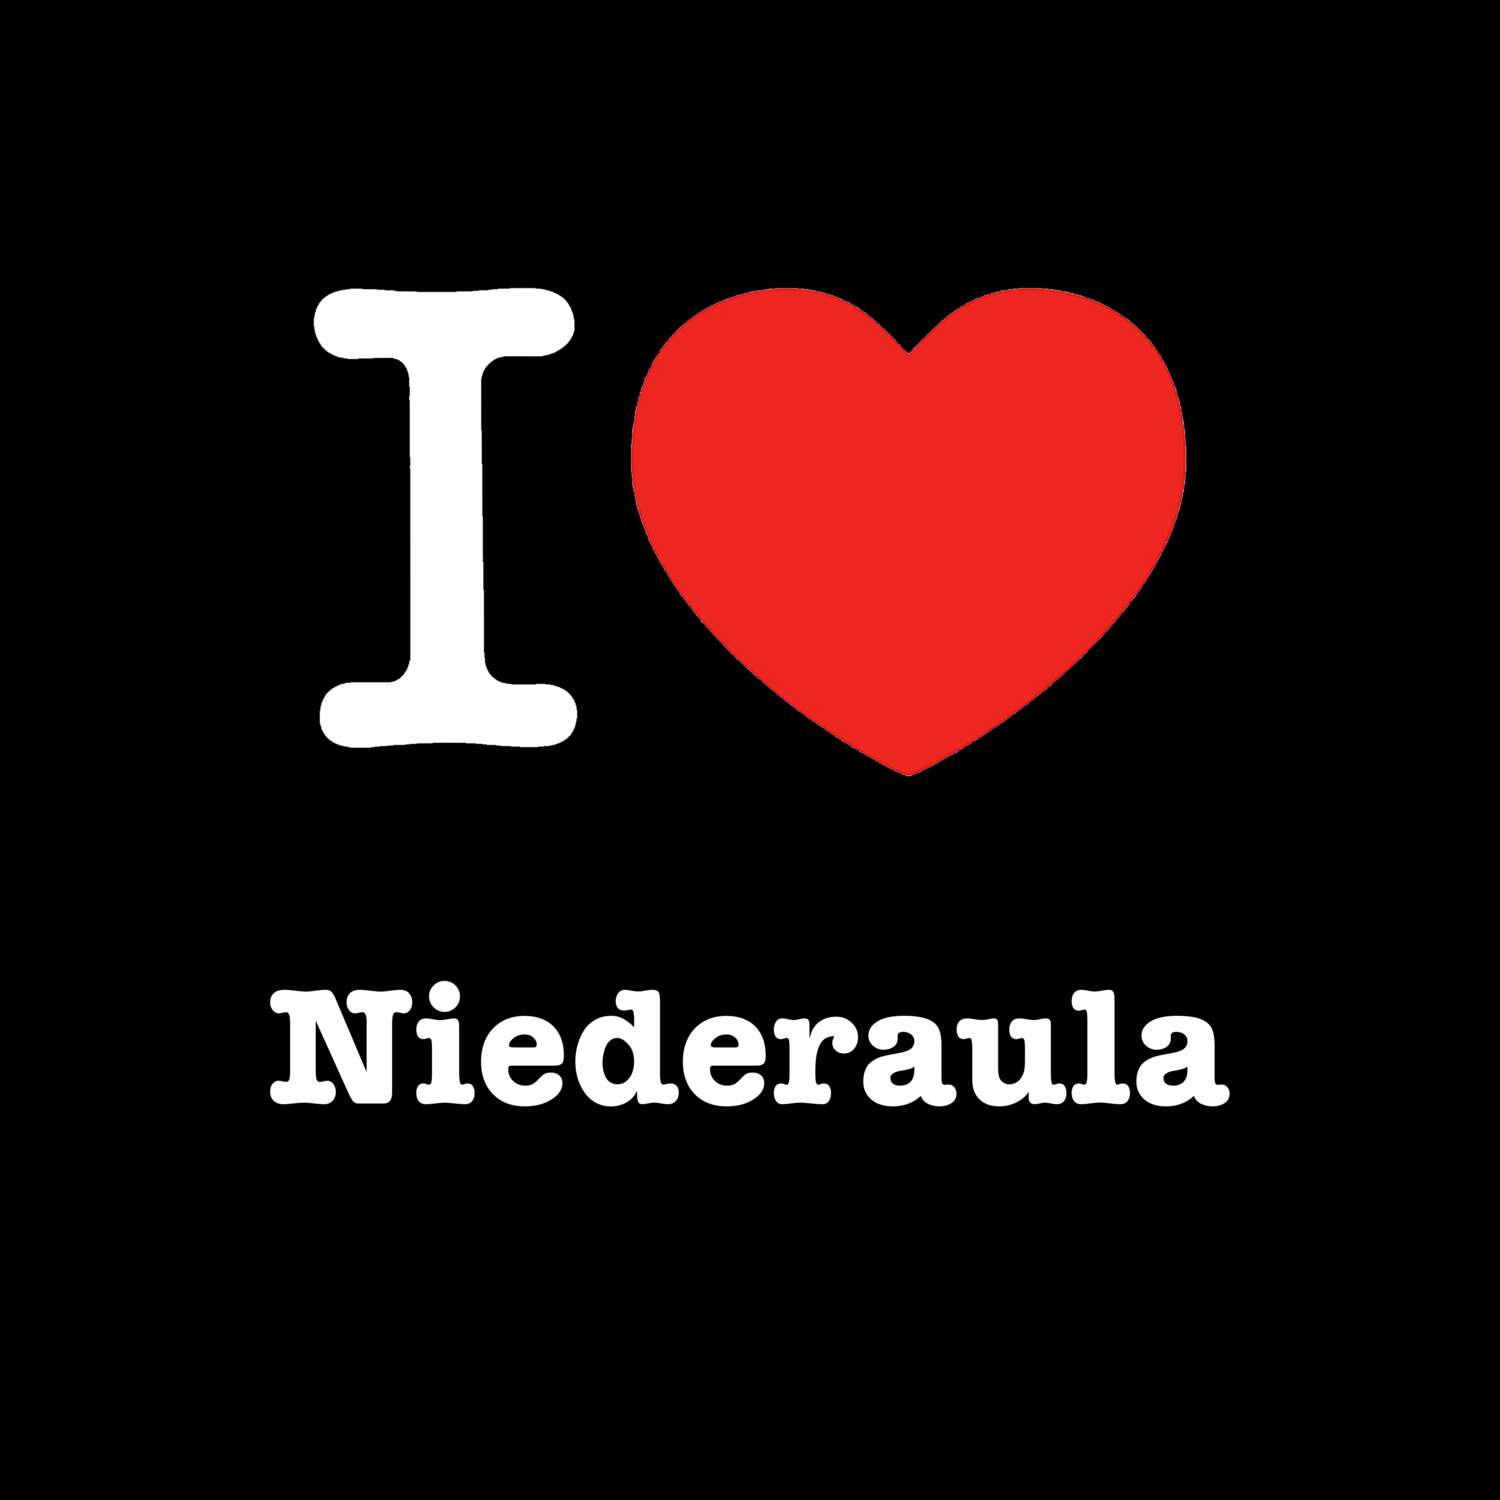 Niederaula T-Shirt »I love«